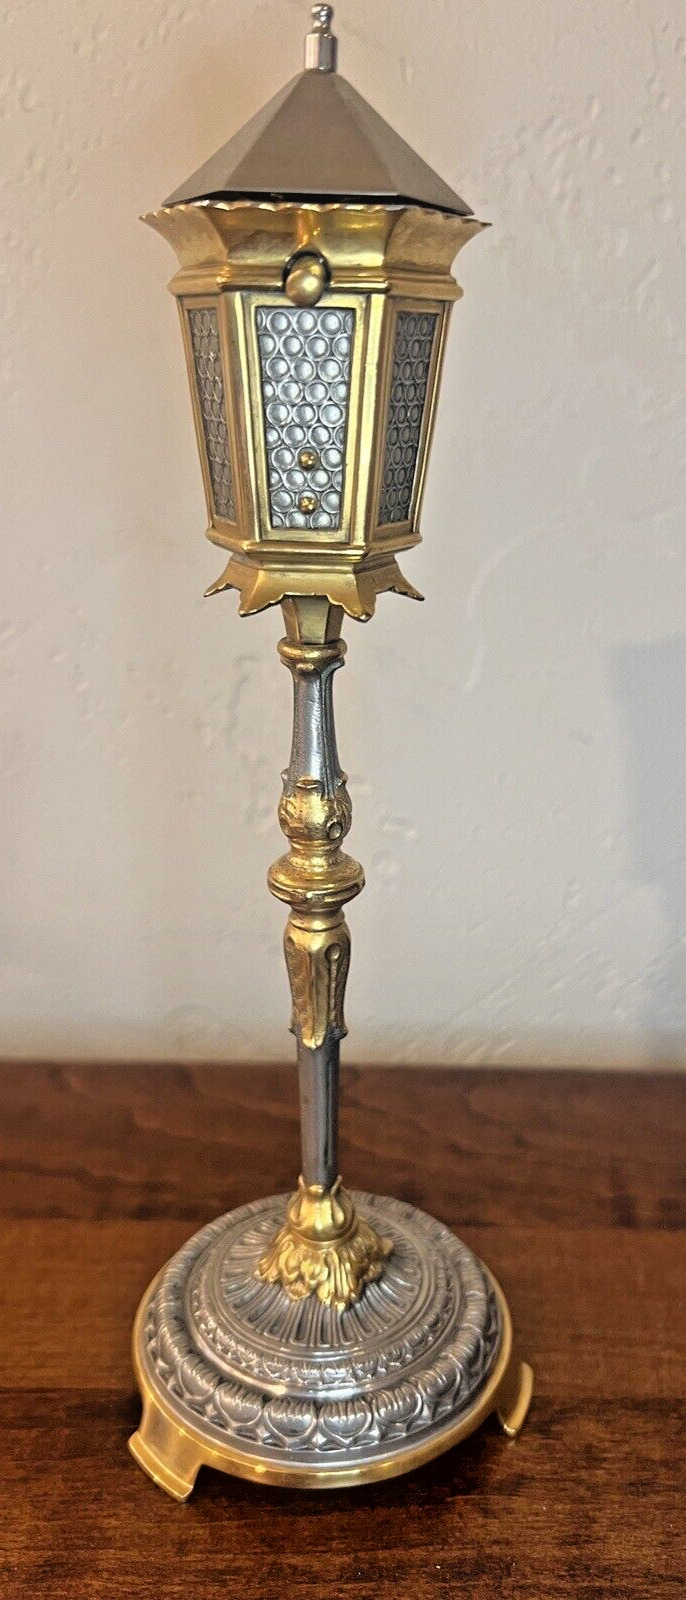 1940s German Erhard & Sohne Street Lamp candlestick table lighter, never fired